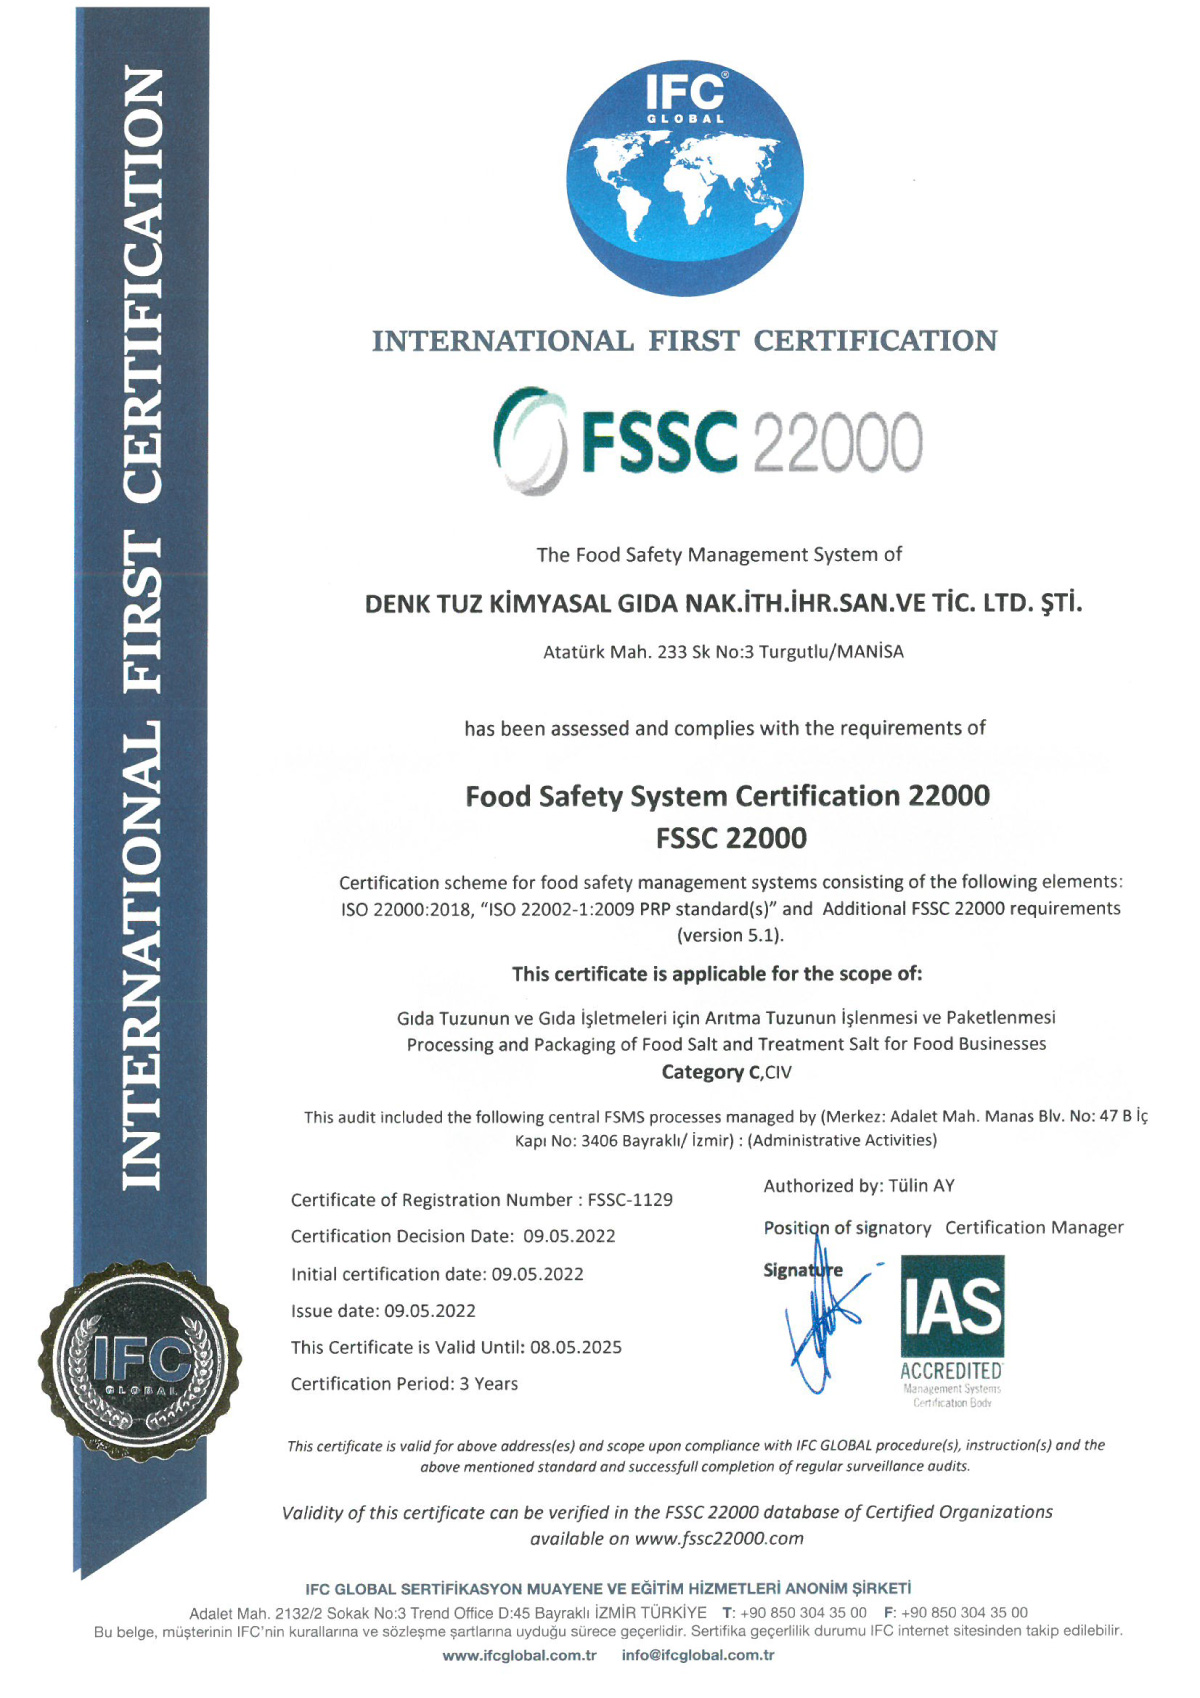 ISO 9001-2015 Certifika